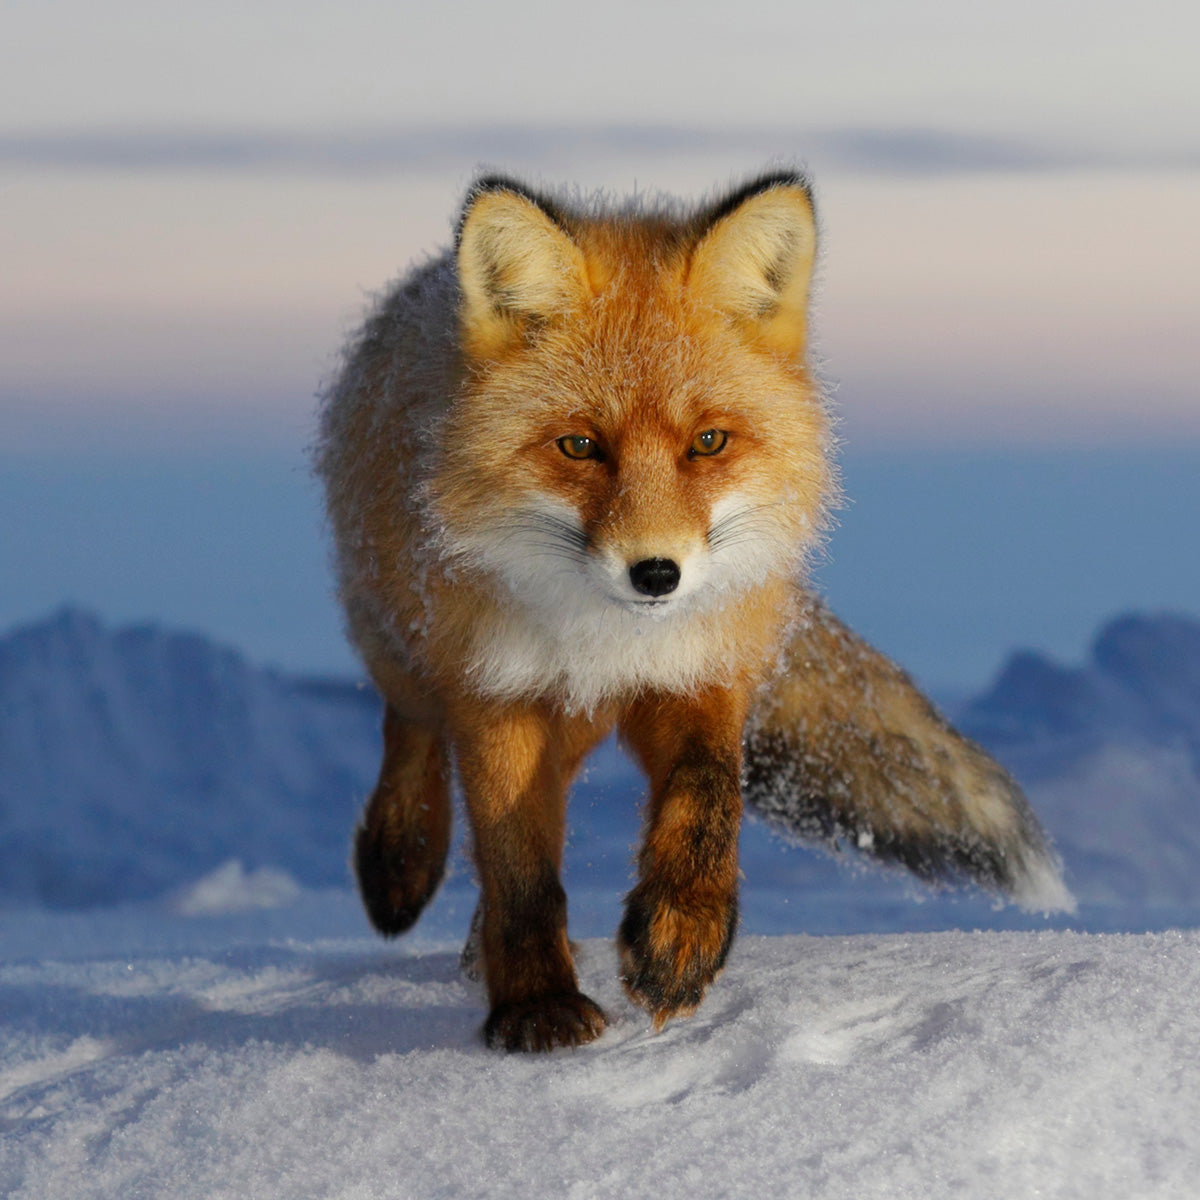 Adopt a Cross Fox  Symbolic Adoptions from WWF